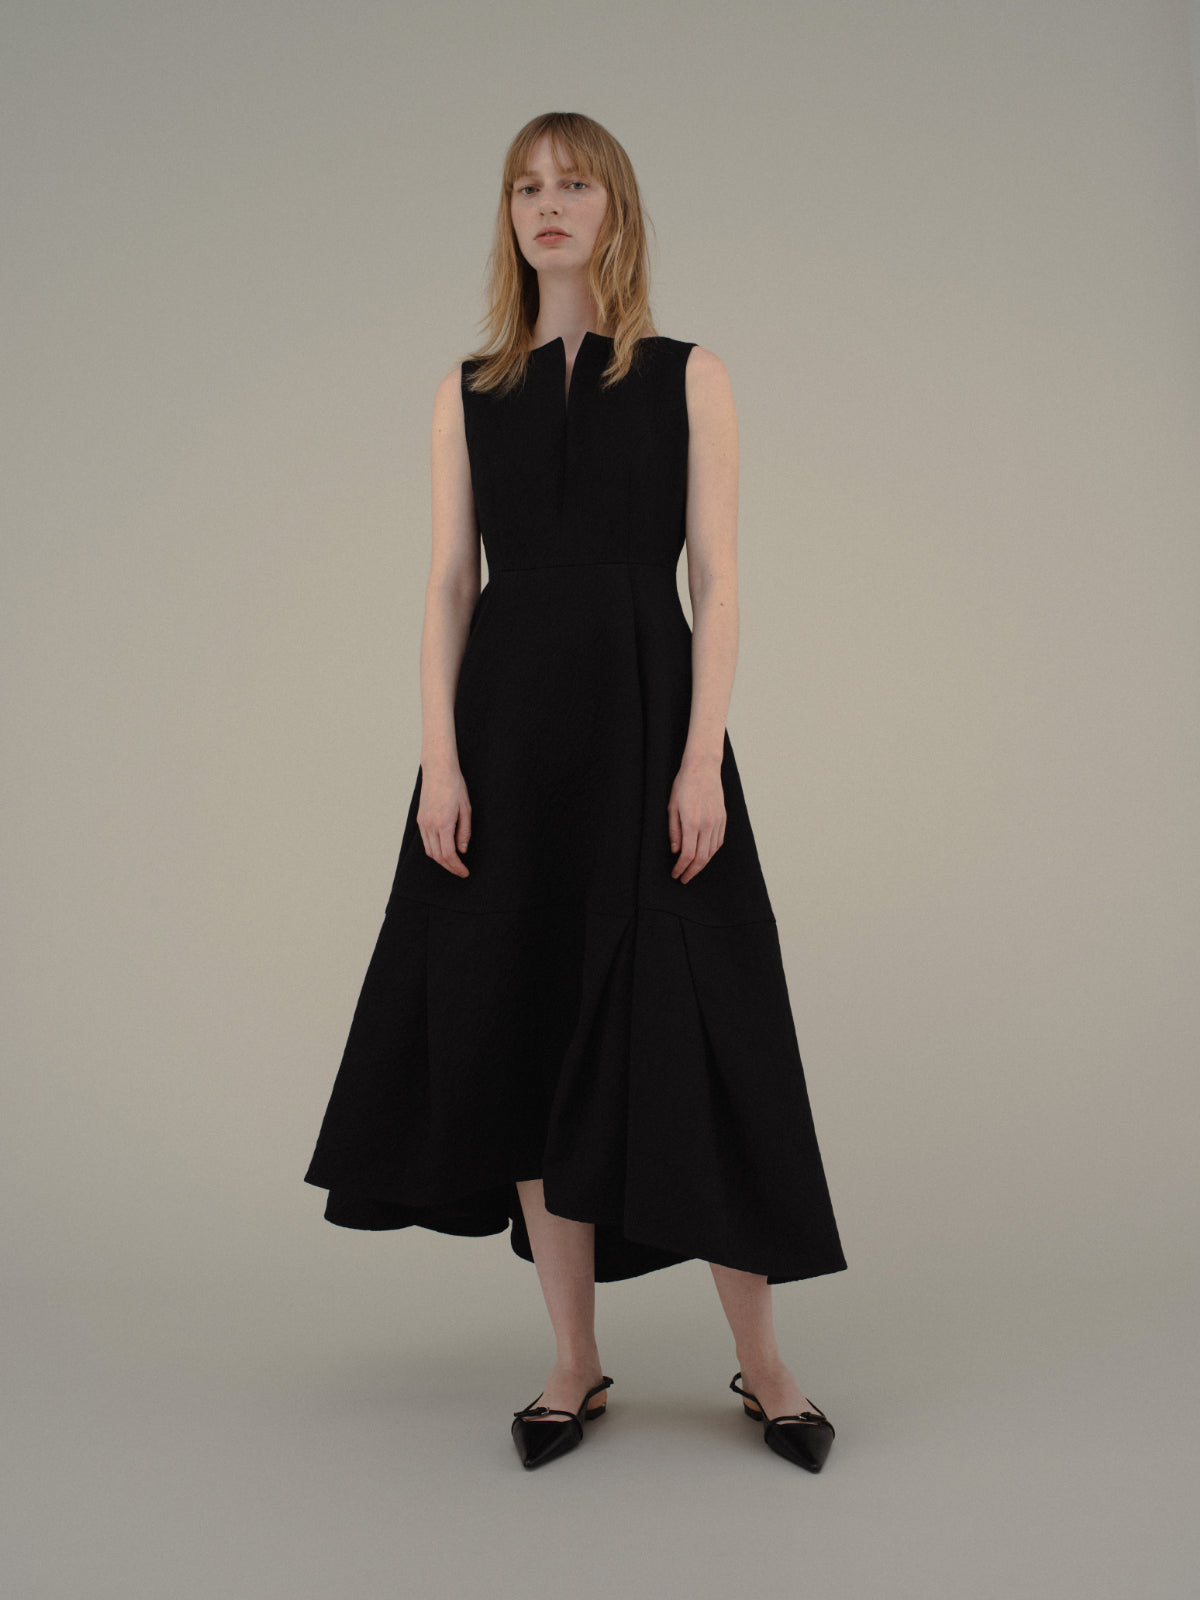 Keyneck Jacquard Dress 追加受注販売のお知らせ – L'AUBE BLANC